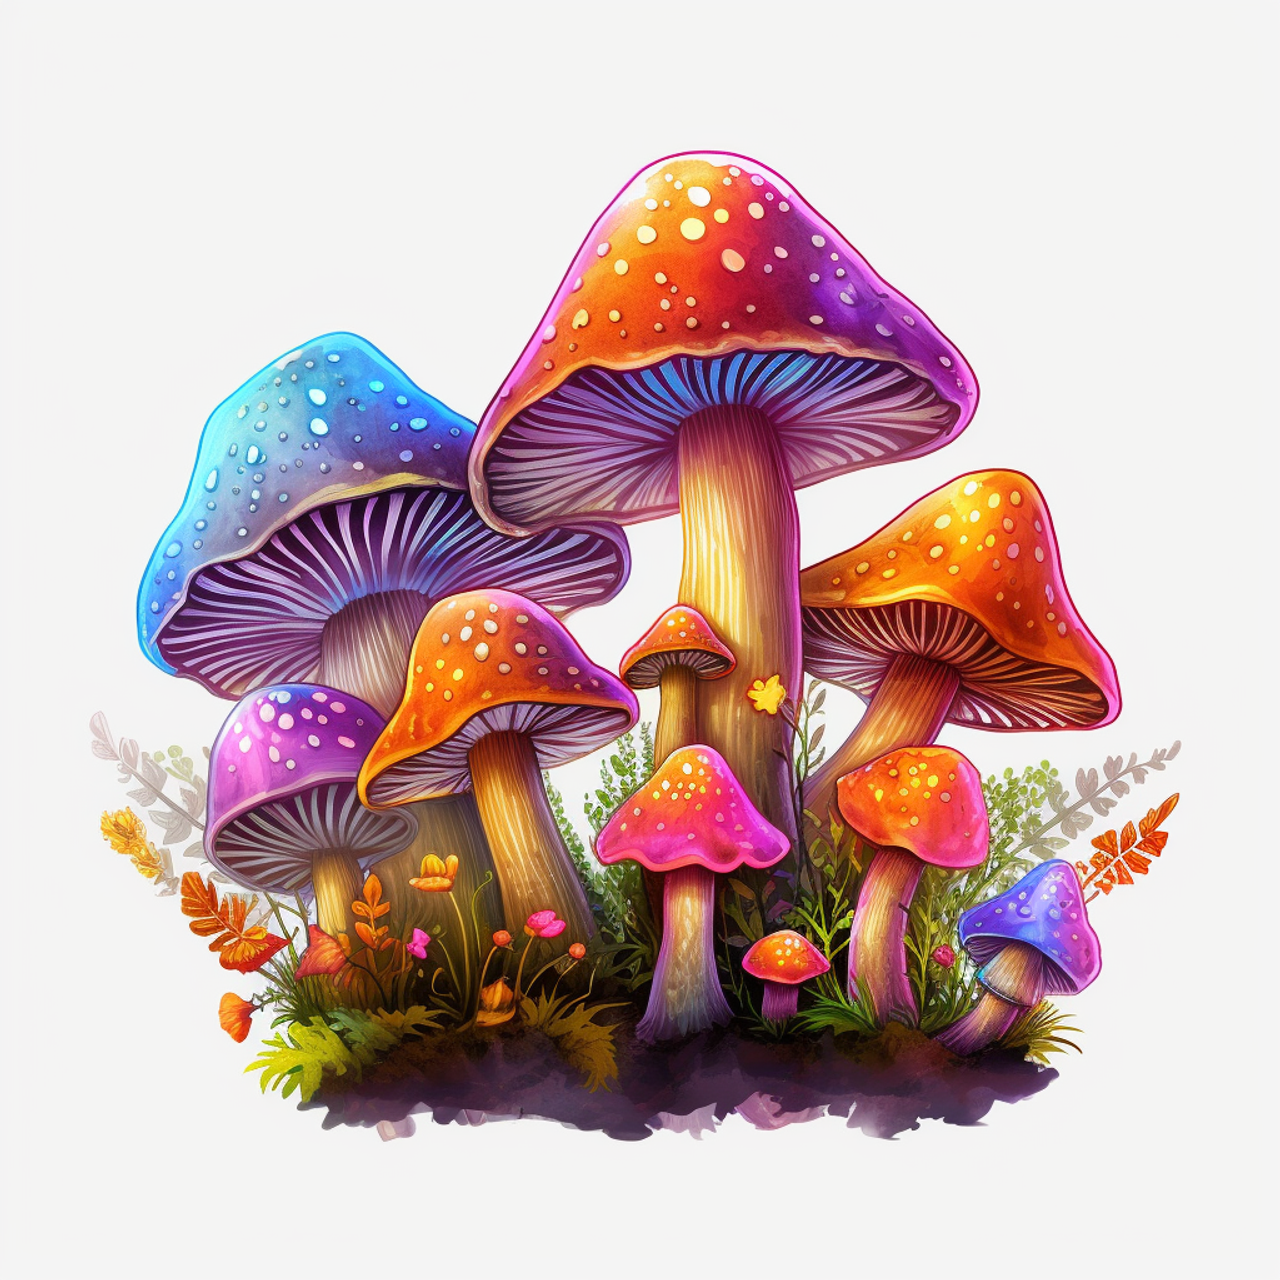 5D Diamond Painting Colorful Mushrooms Kit - Bonanza Marketplace